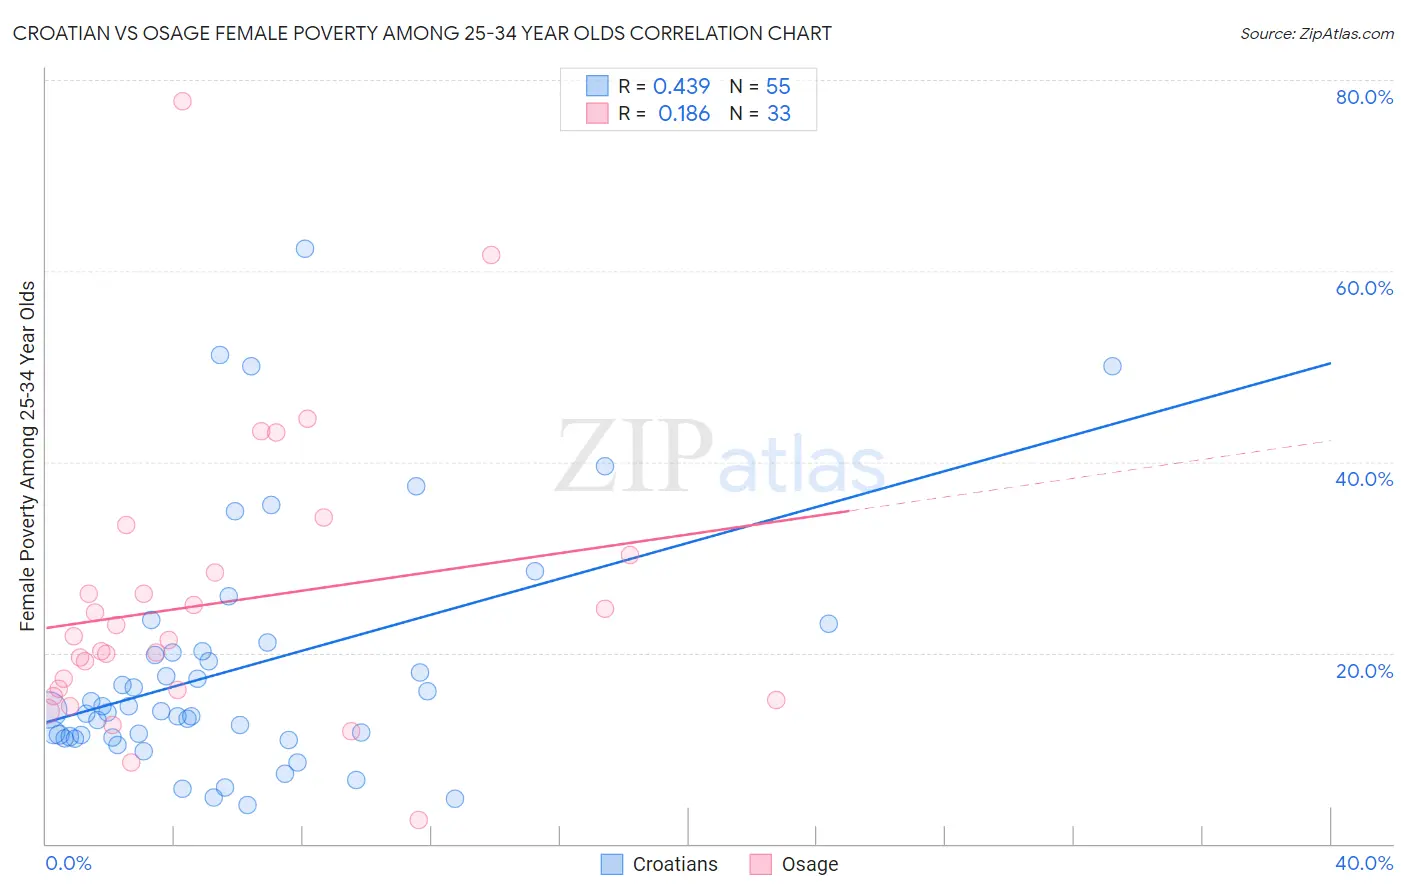 Croatian vs Osage Female Poverty Among 25-34 Year Olds